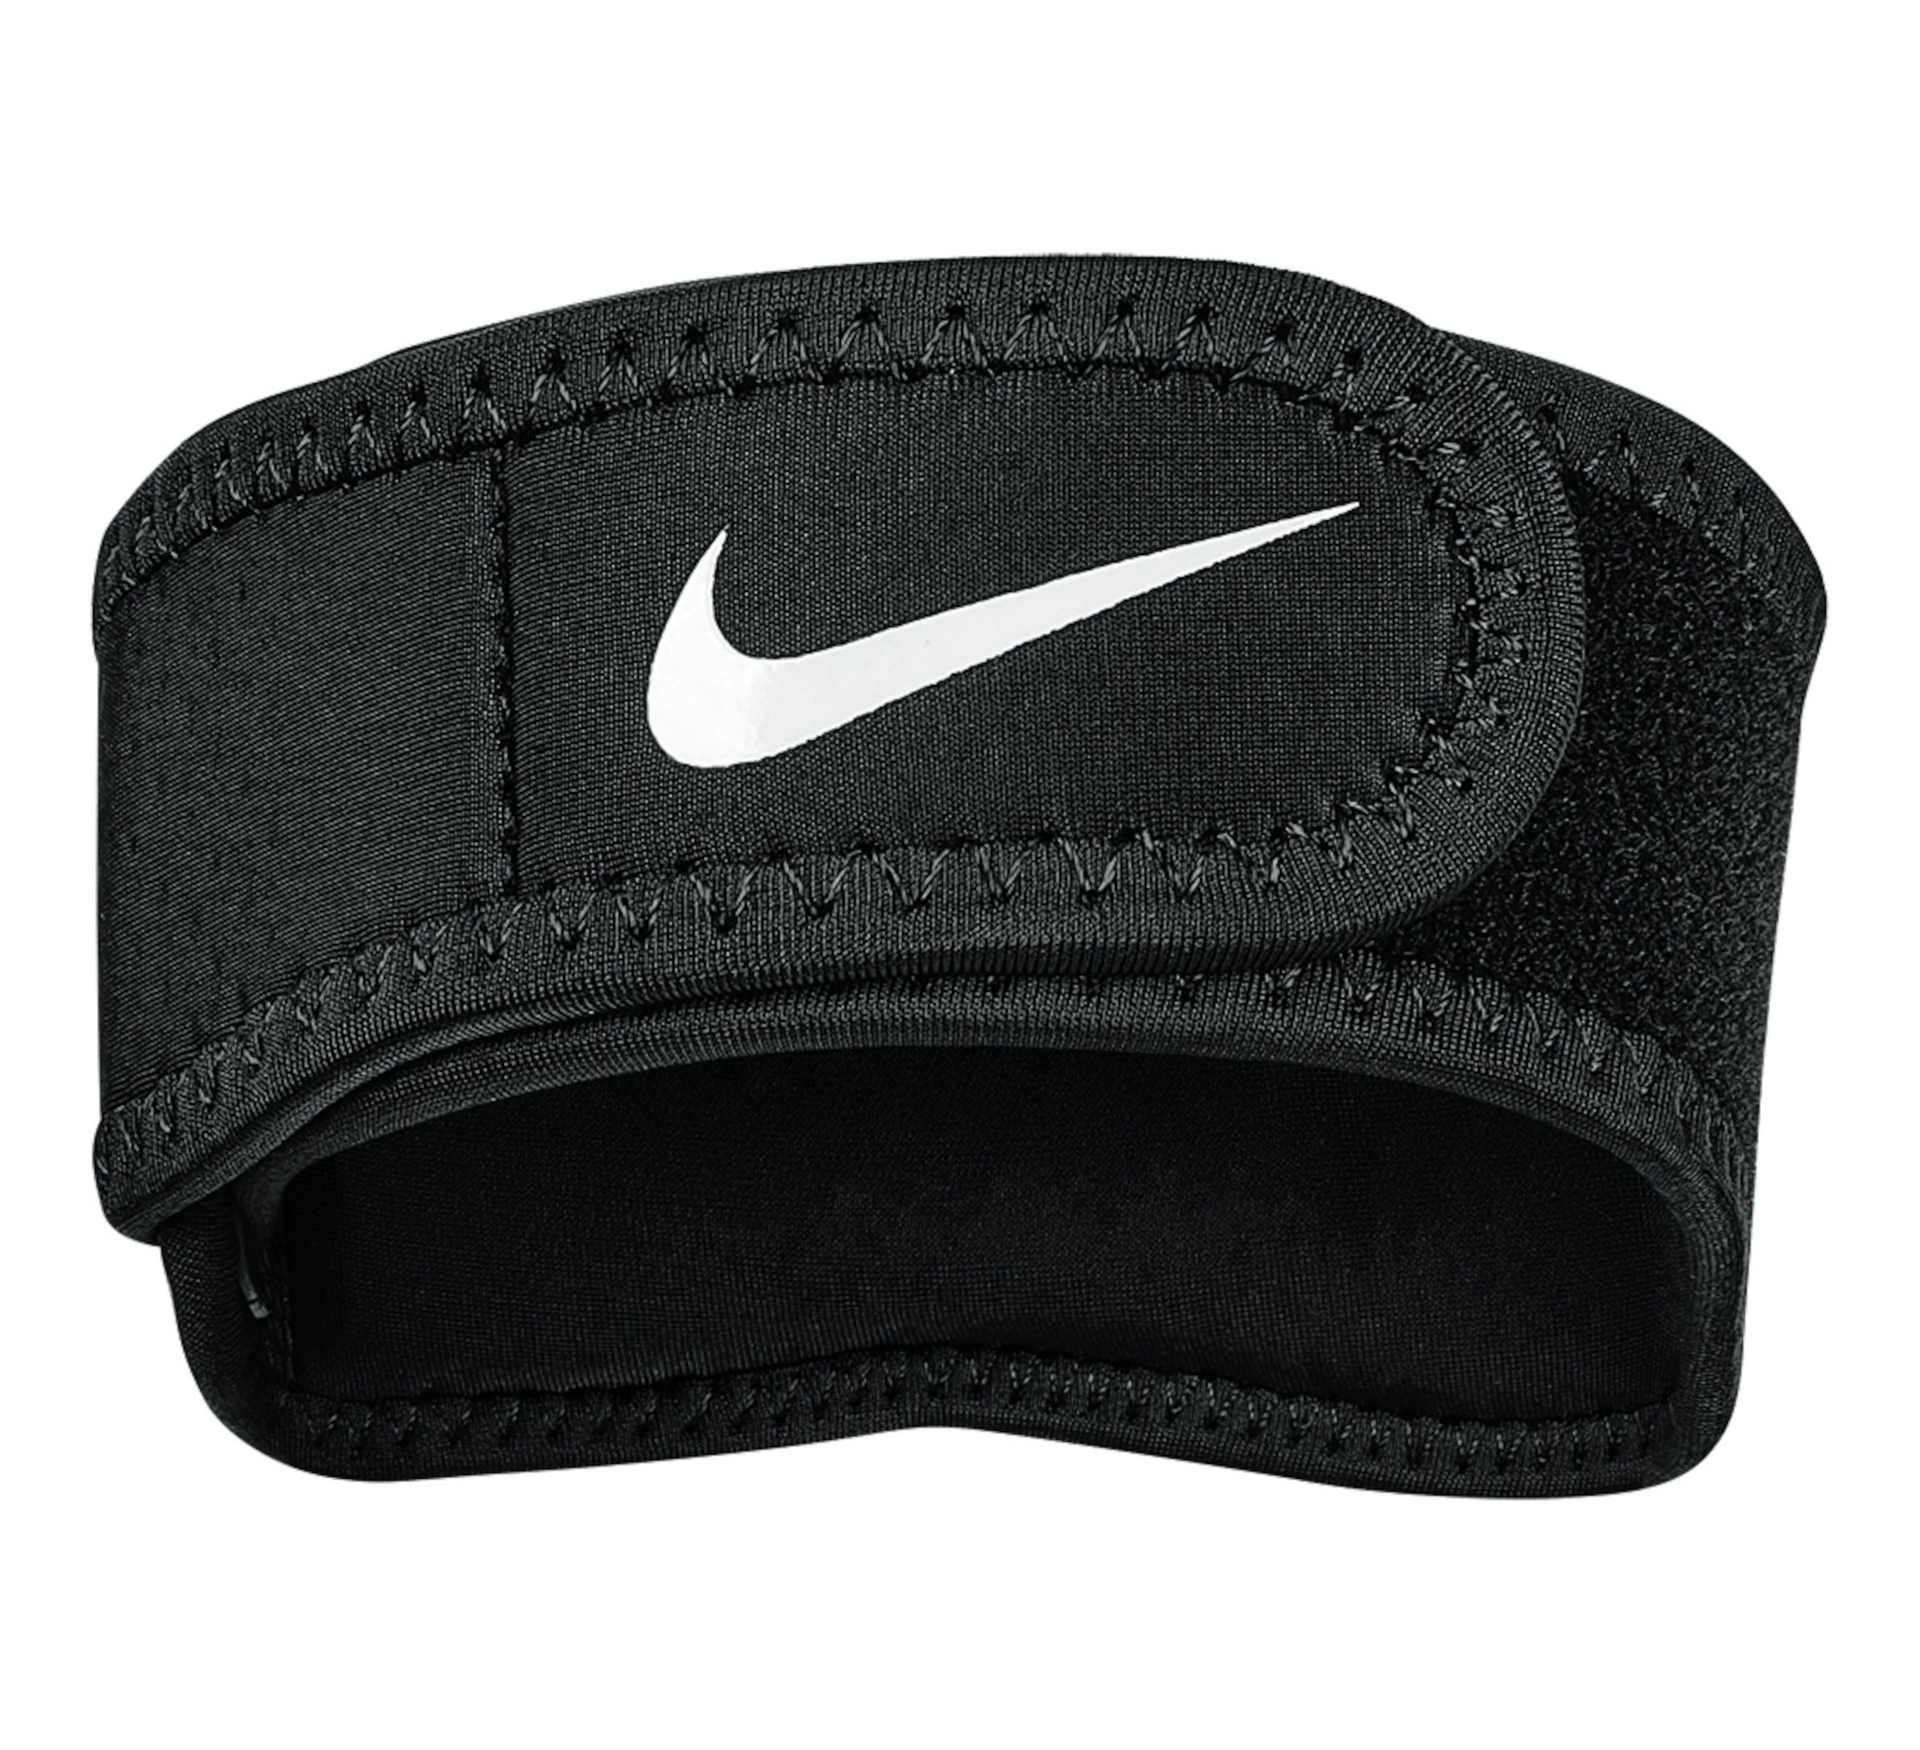 Nike Pro Tennis / Golf Elbow Band 3.0